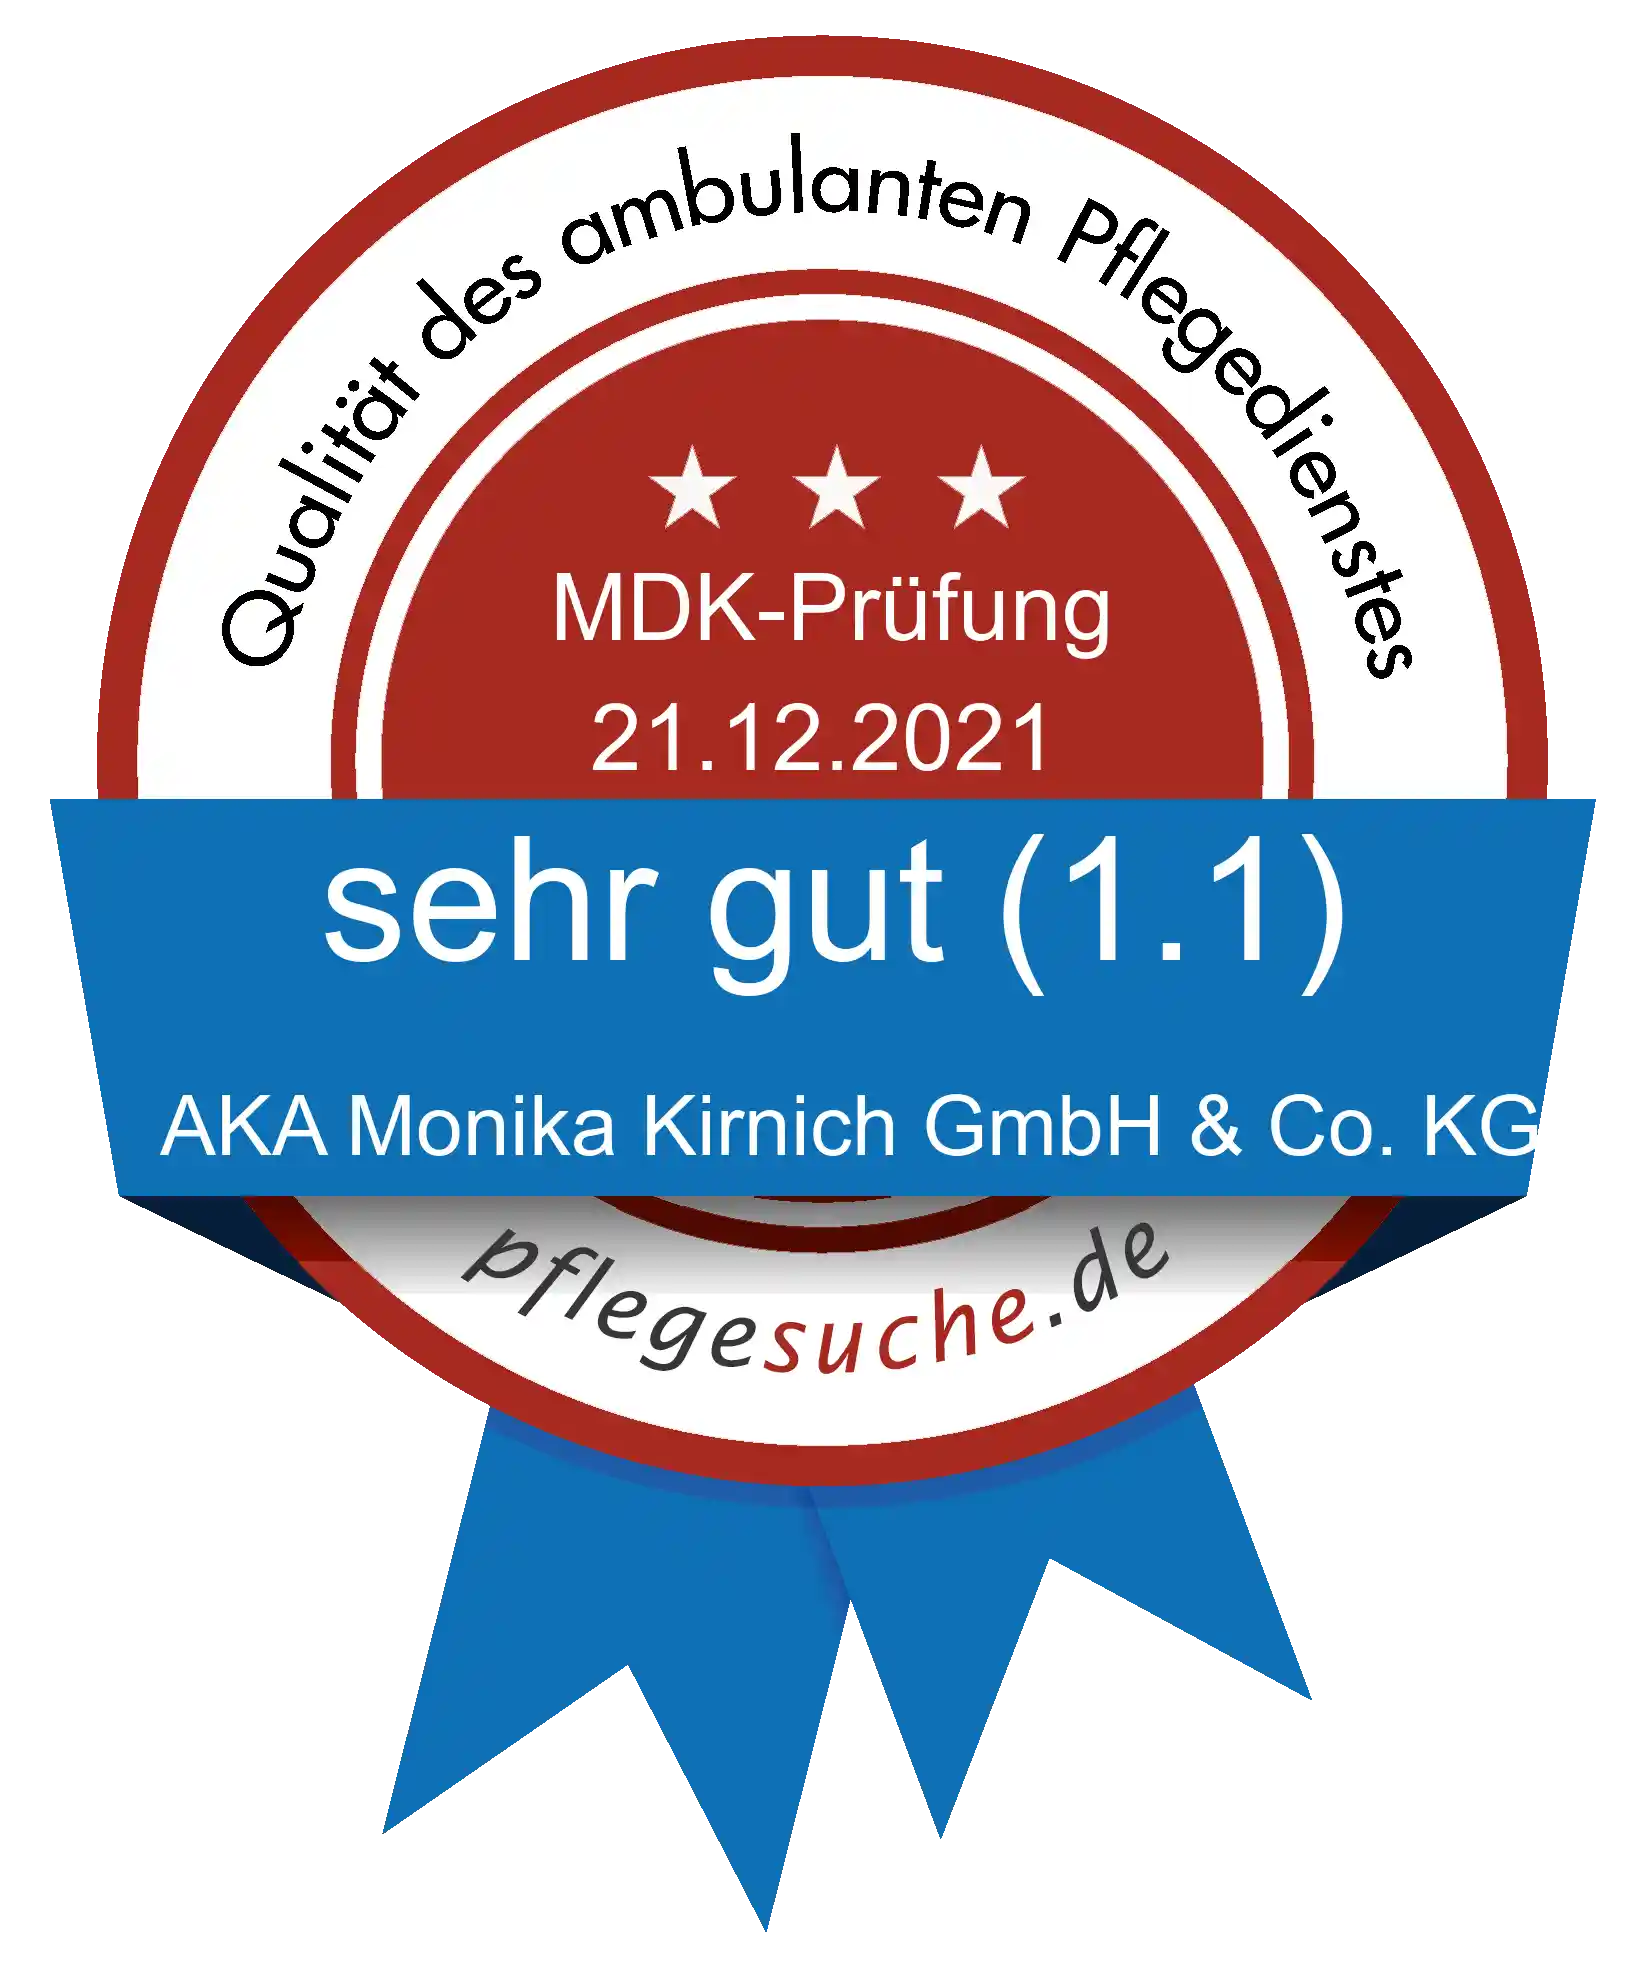 Siegel Benotung: AKA Monika Kirnich GmbH & Co. KG